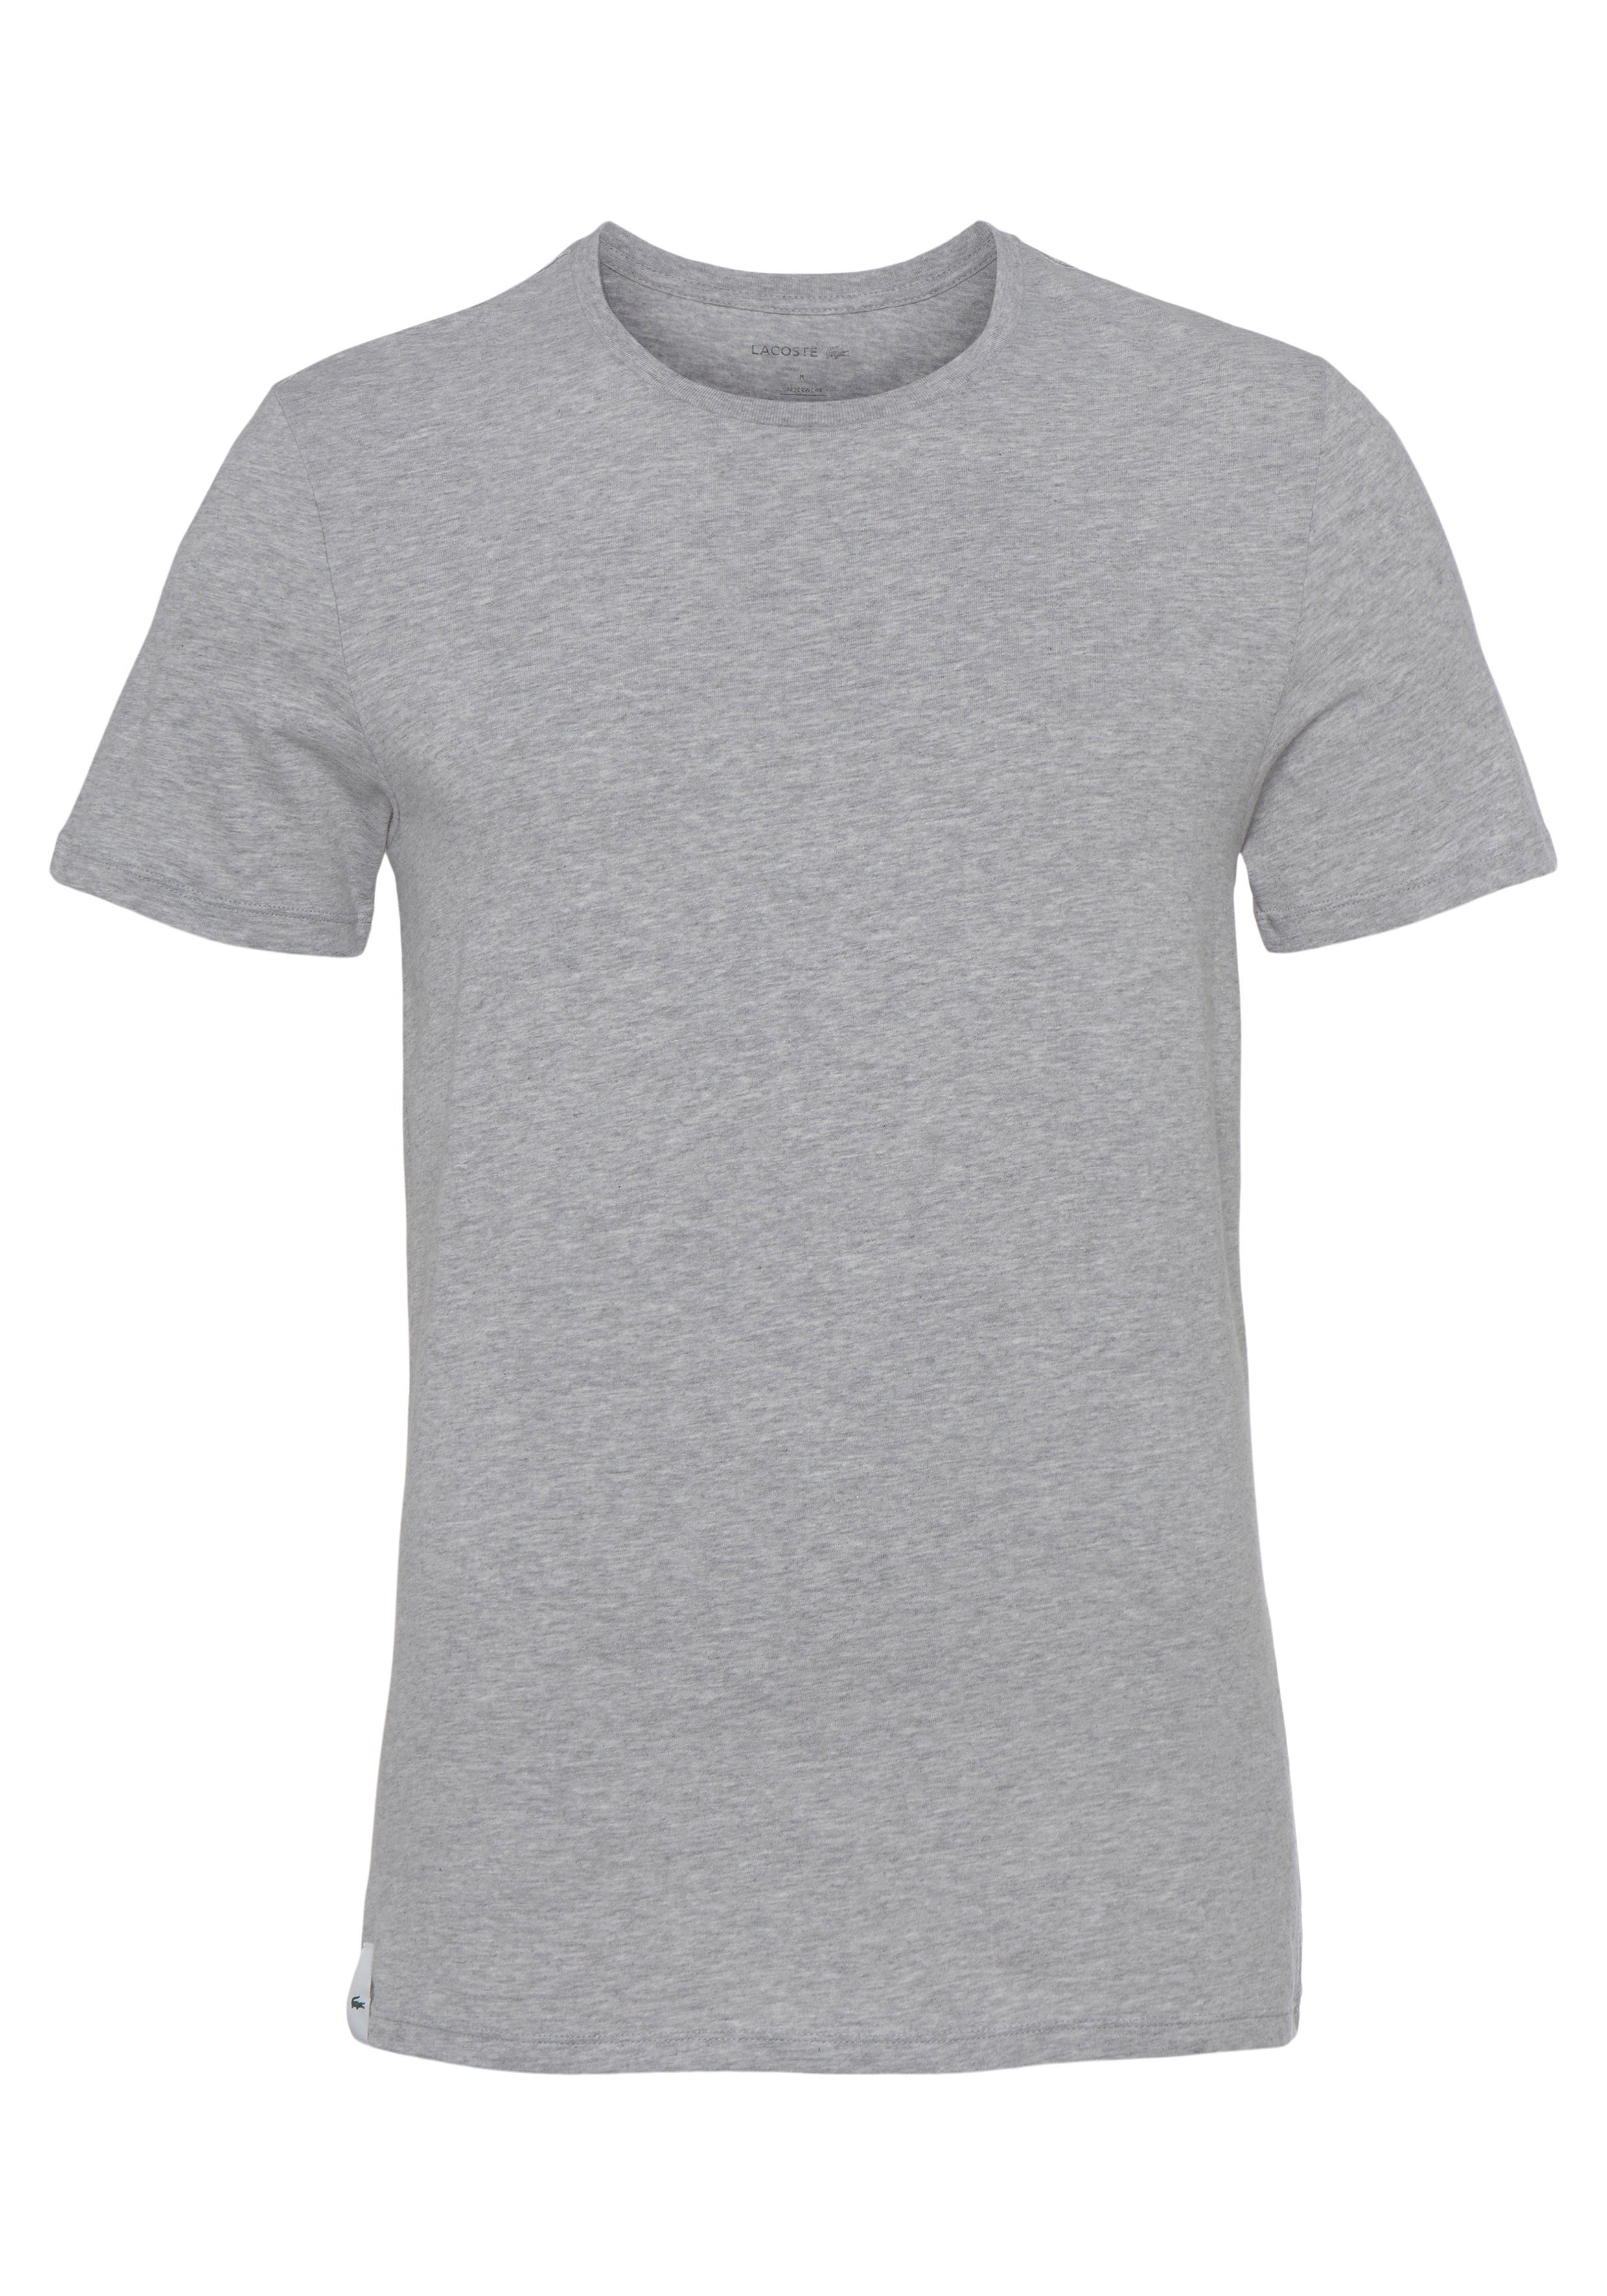 Hautgefühl grau T-Shirt weiß (3er-Pack) für angenehmes Lacoste Atmungsaktives schwarz Baumwollmaterial